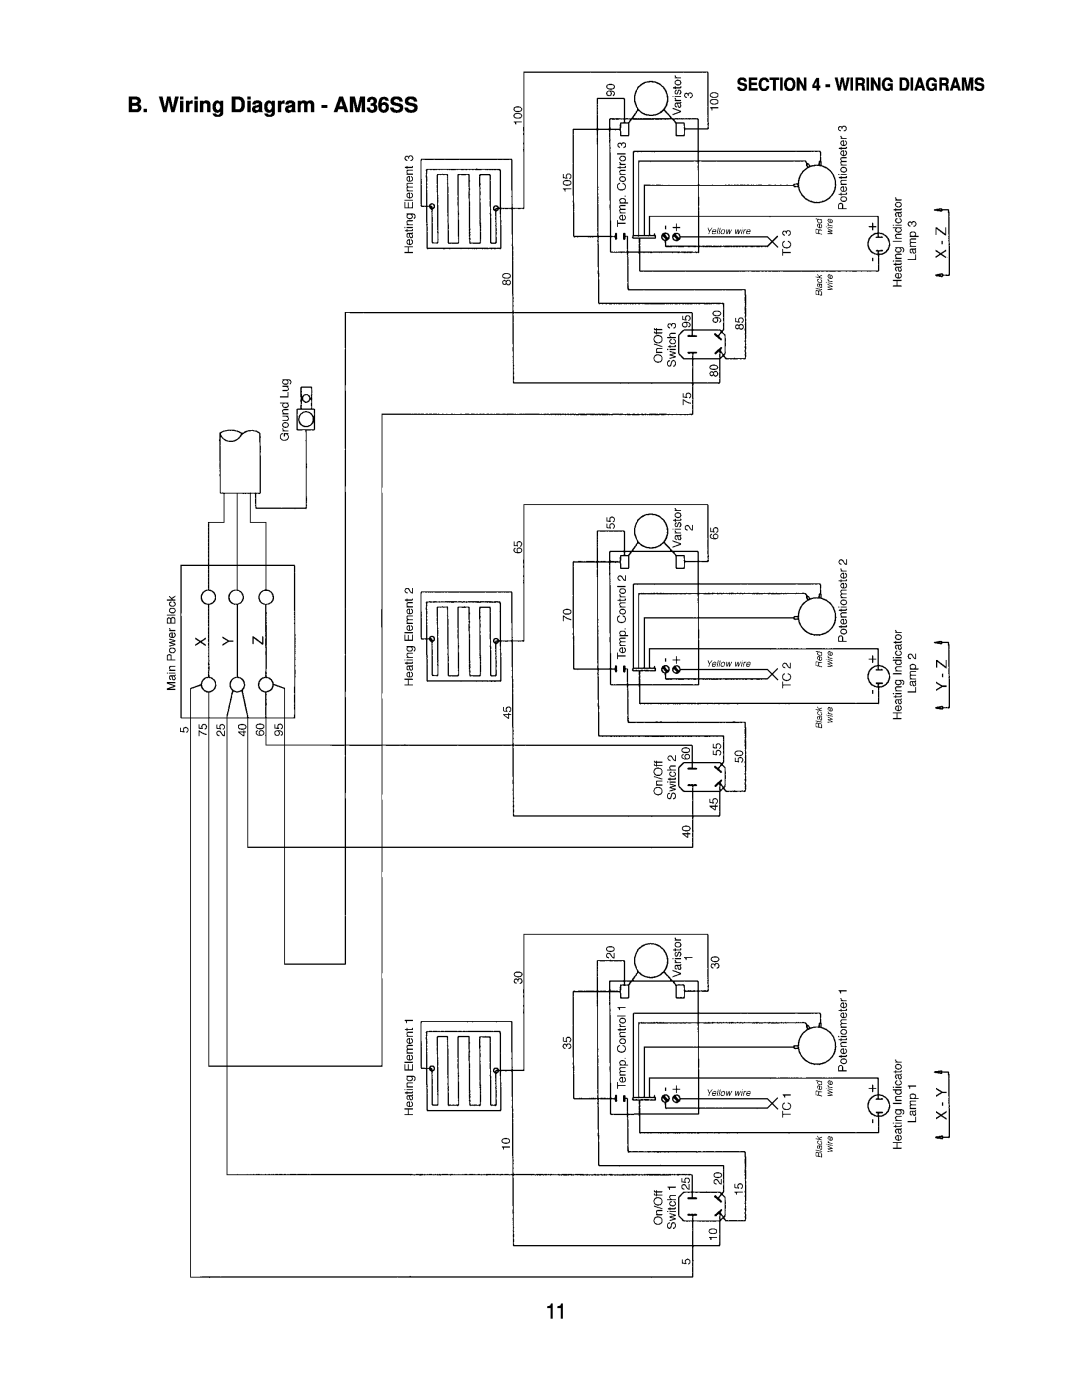 Toastmaster AM24SS installation manual B. Wiring Diagram - AM36SS, Wiring Diagrams 